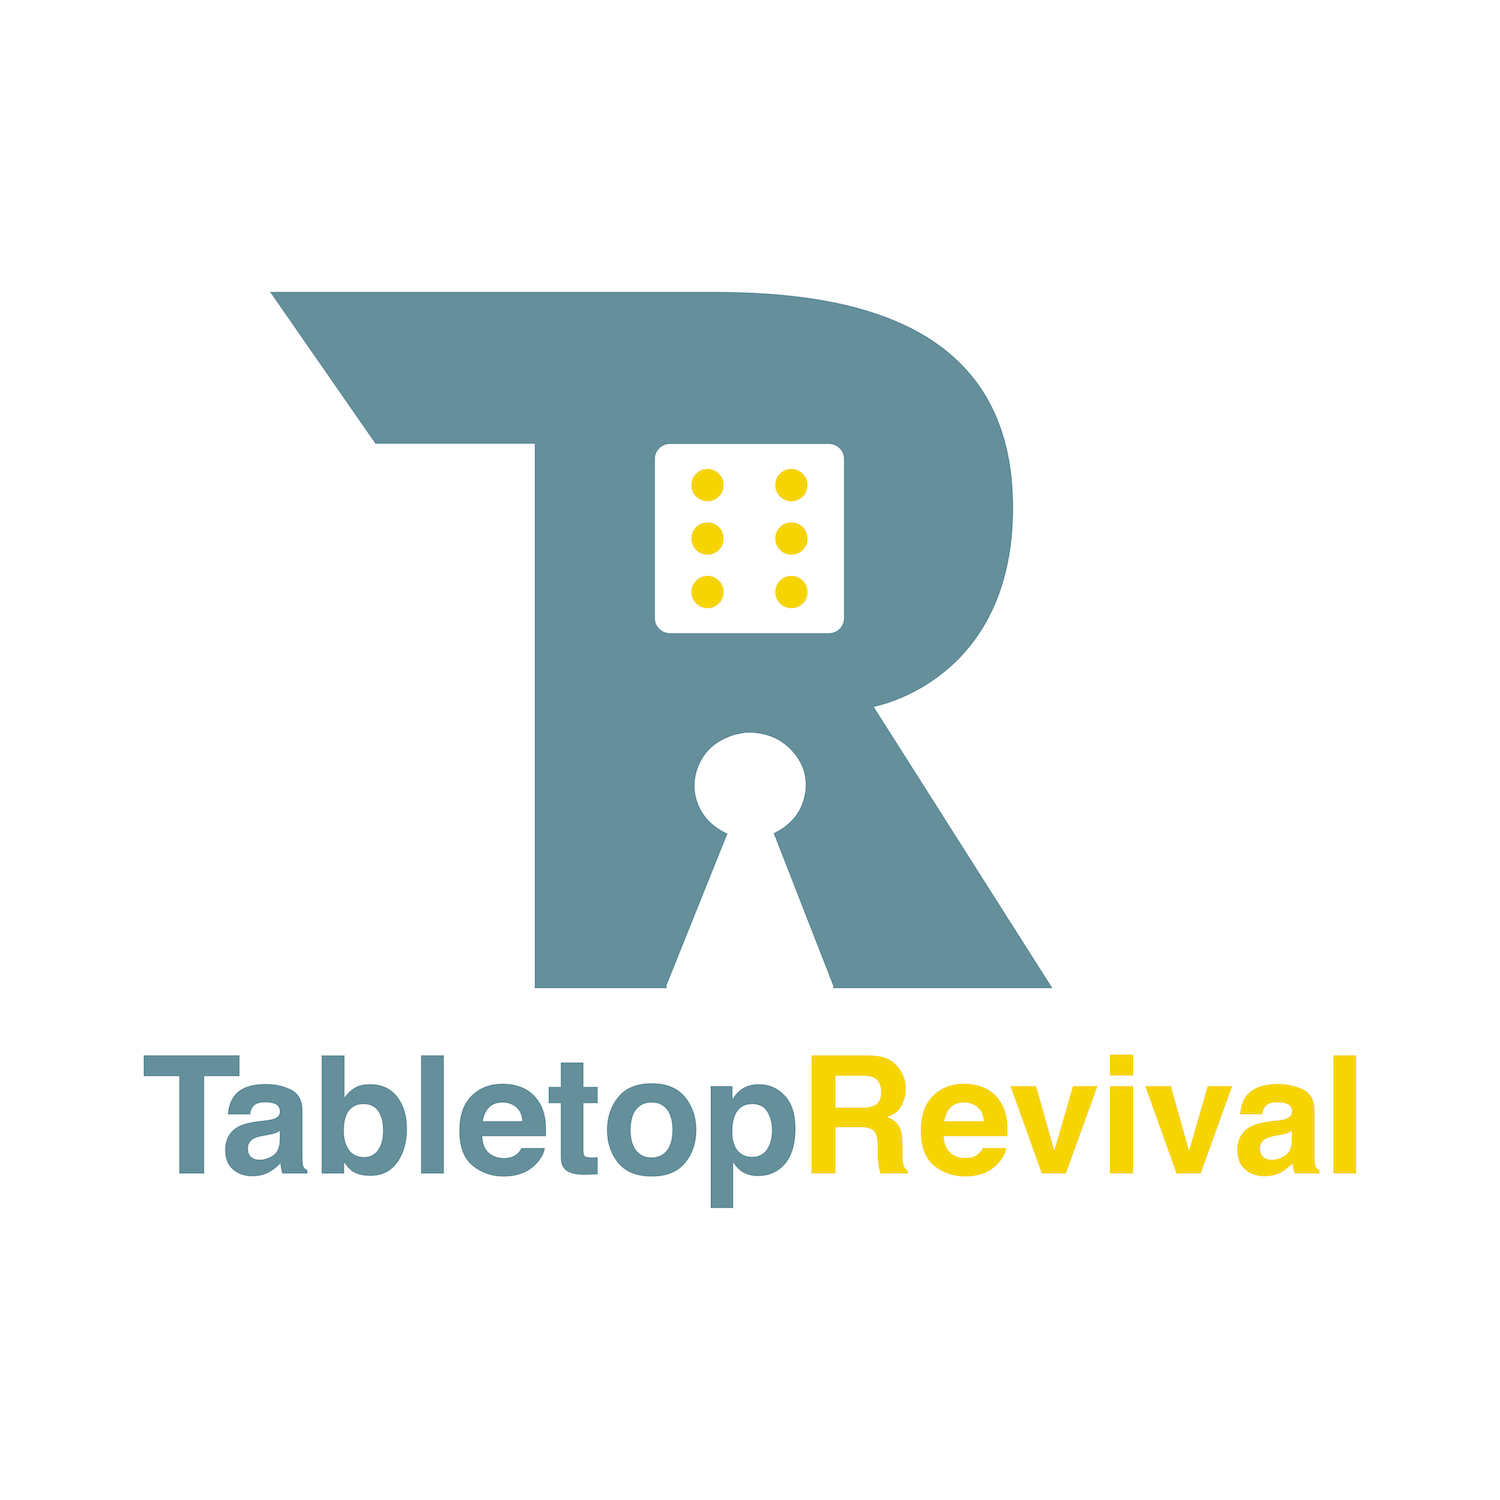 tabletopRevival_logo-04.png